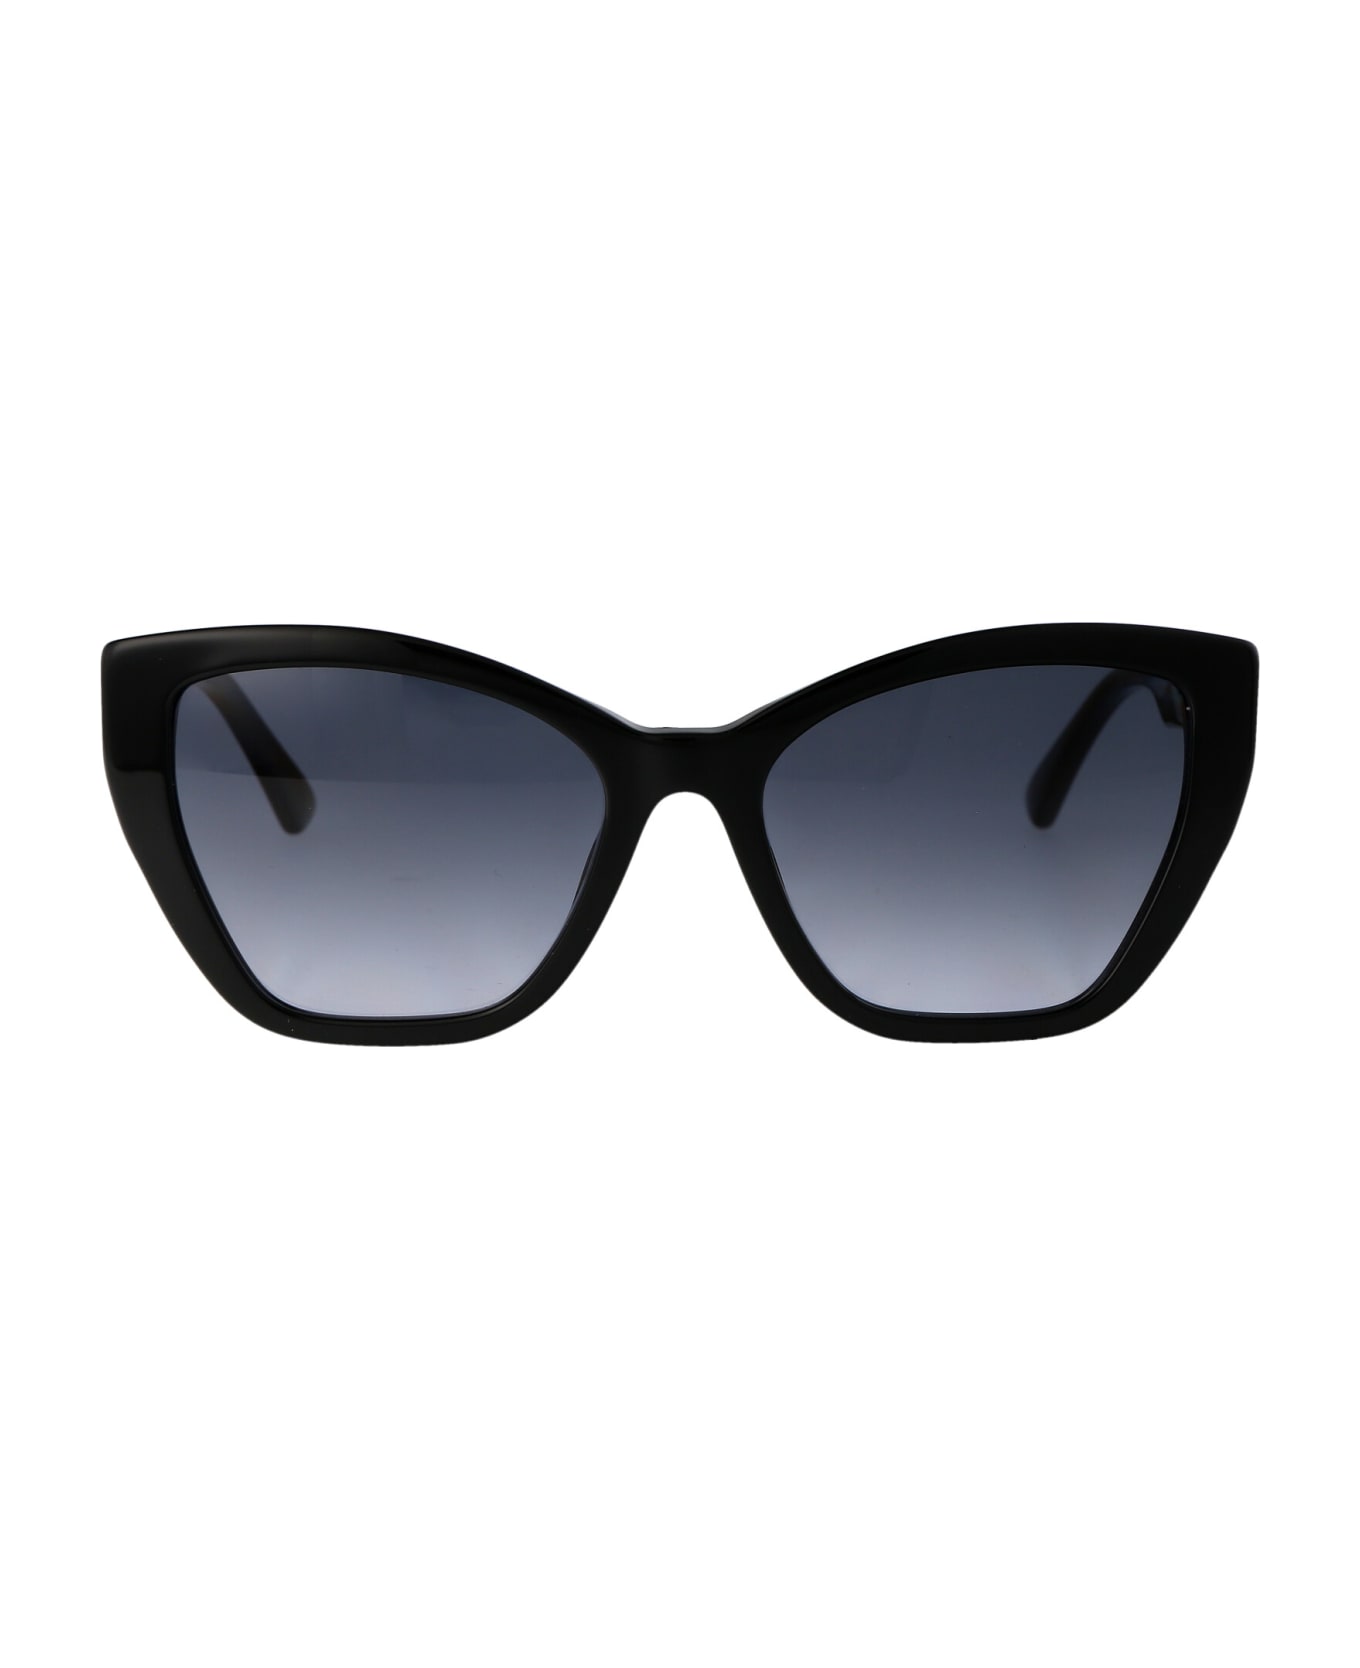 Moschino Eyewear Mos155/s sunglasses DG4411 - 8079O BLACK